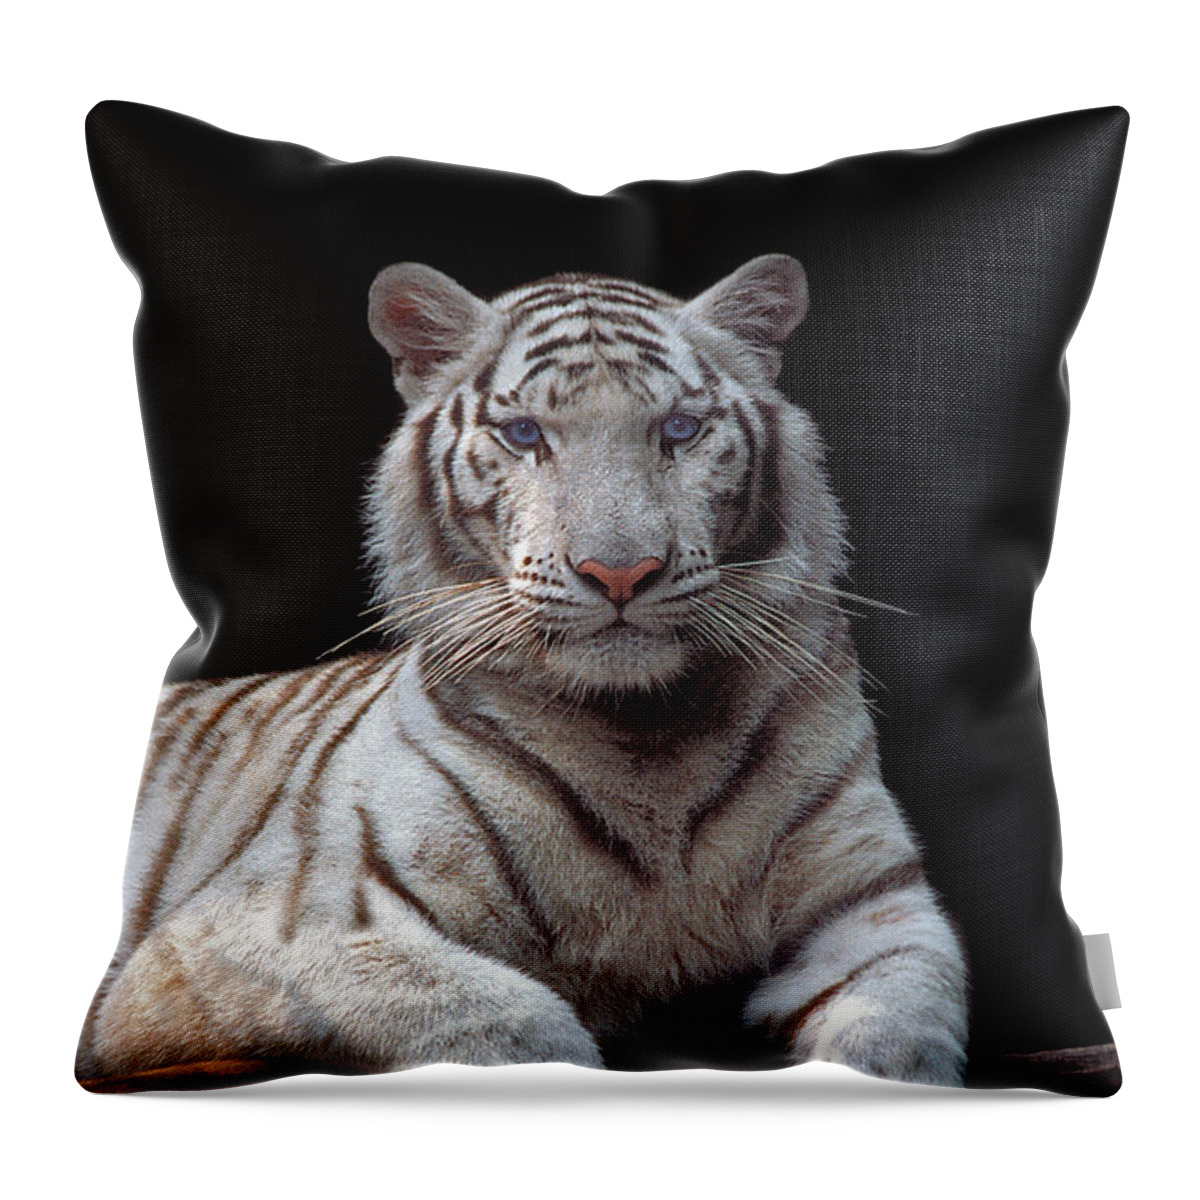 White Tiger Throw Pillow featuring the photograph White Tiger by John Douglas